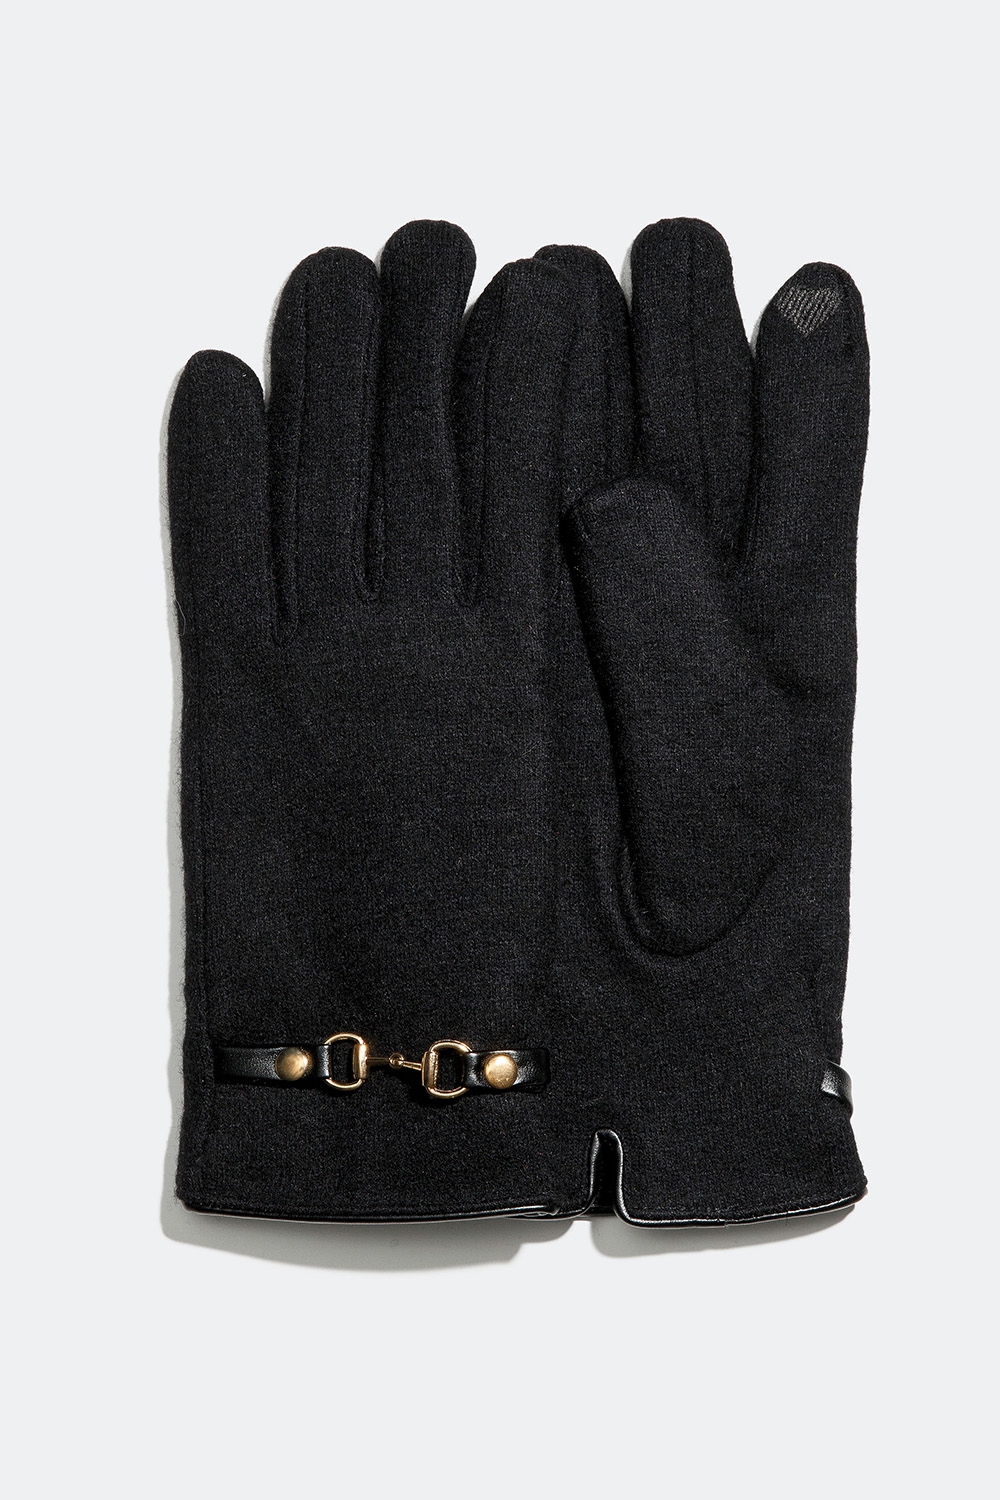 Sorte handsker i uld med hestebid i gruppen Tilbehør / Strik / Handsker hos Glitter (171000059000)